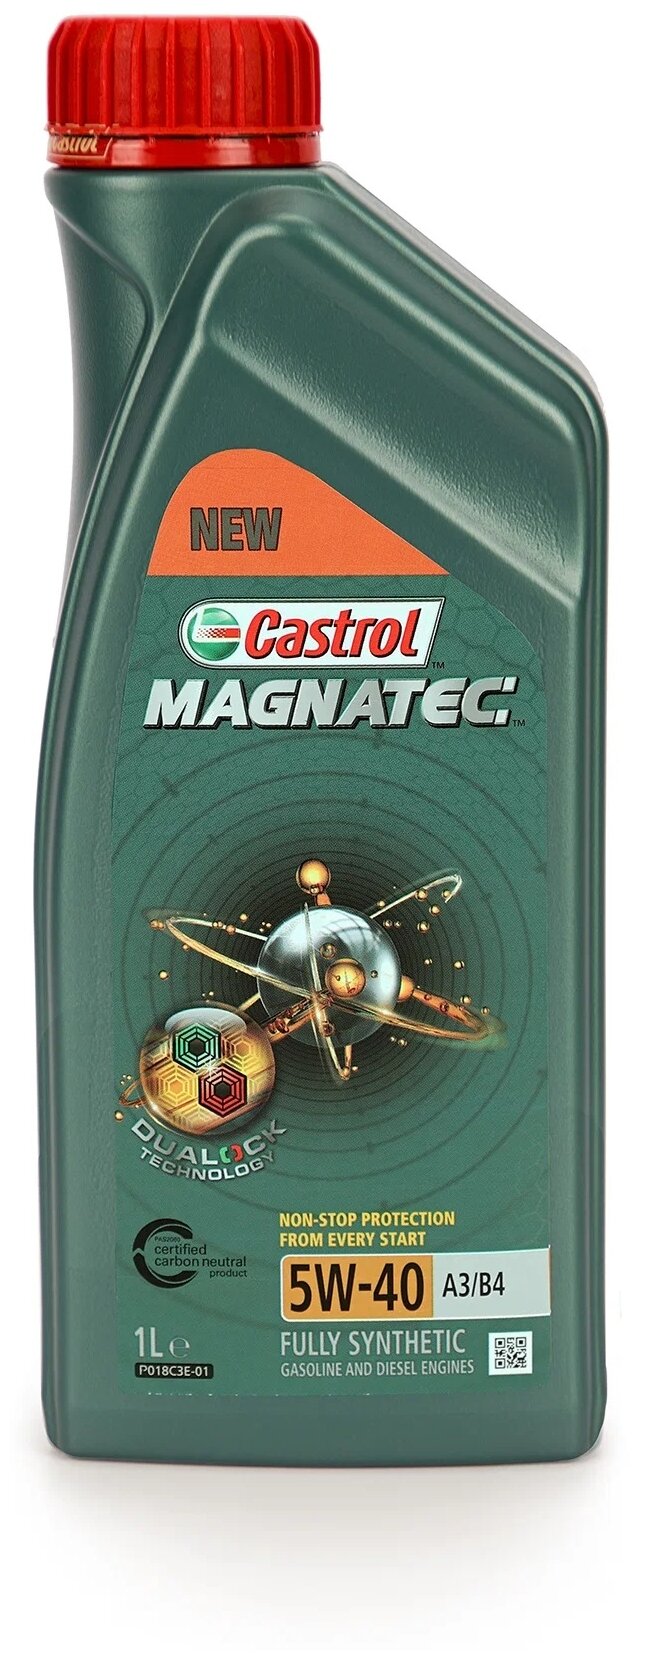 Castrol Масло Magnatec 5W-40 A3/B4 1Л Sn Mb 226.5/229.3/229.5 Renault Rn 0700/0710 Vw 502.00/505.00